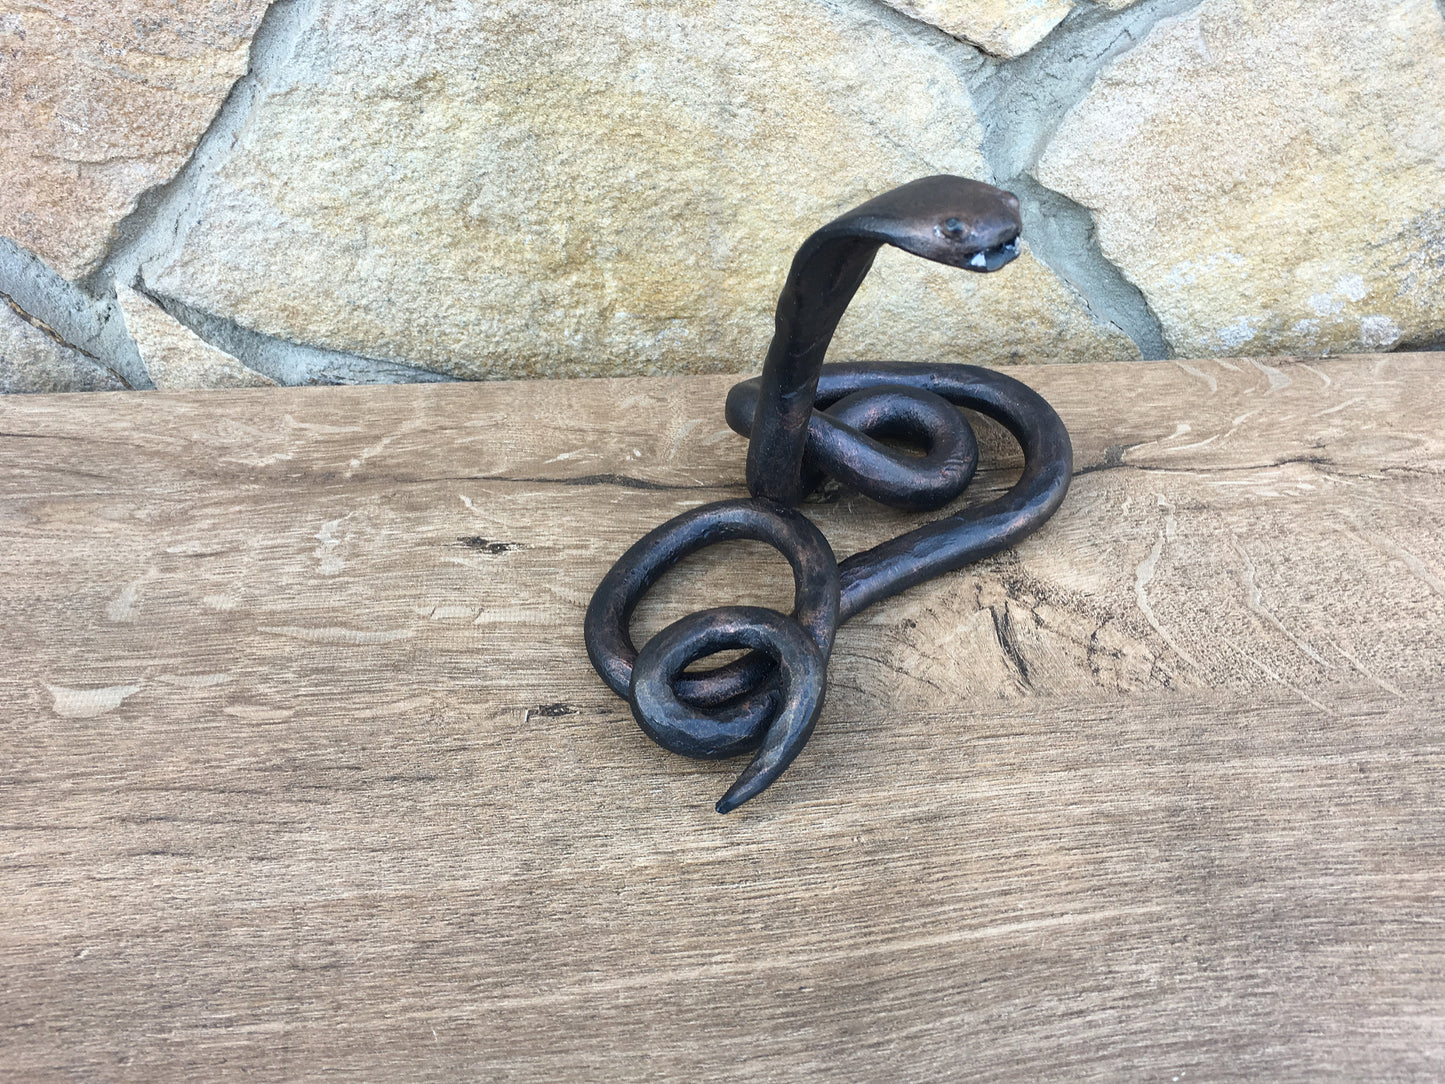 Iron snake, iron cobra, handforged snake, cobra sculpture,iron snakes, blacksmith sculpture, snake gifts, snake sculpture, snake statue